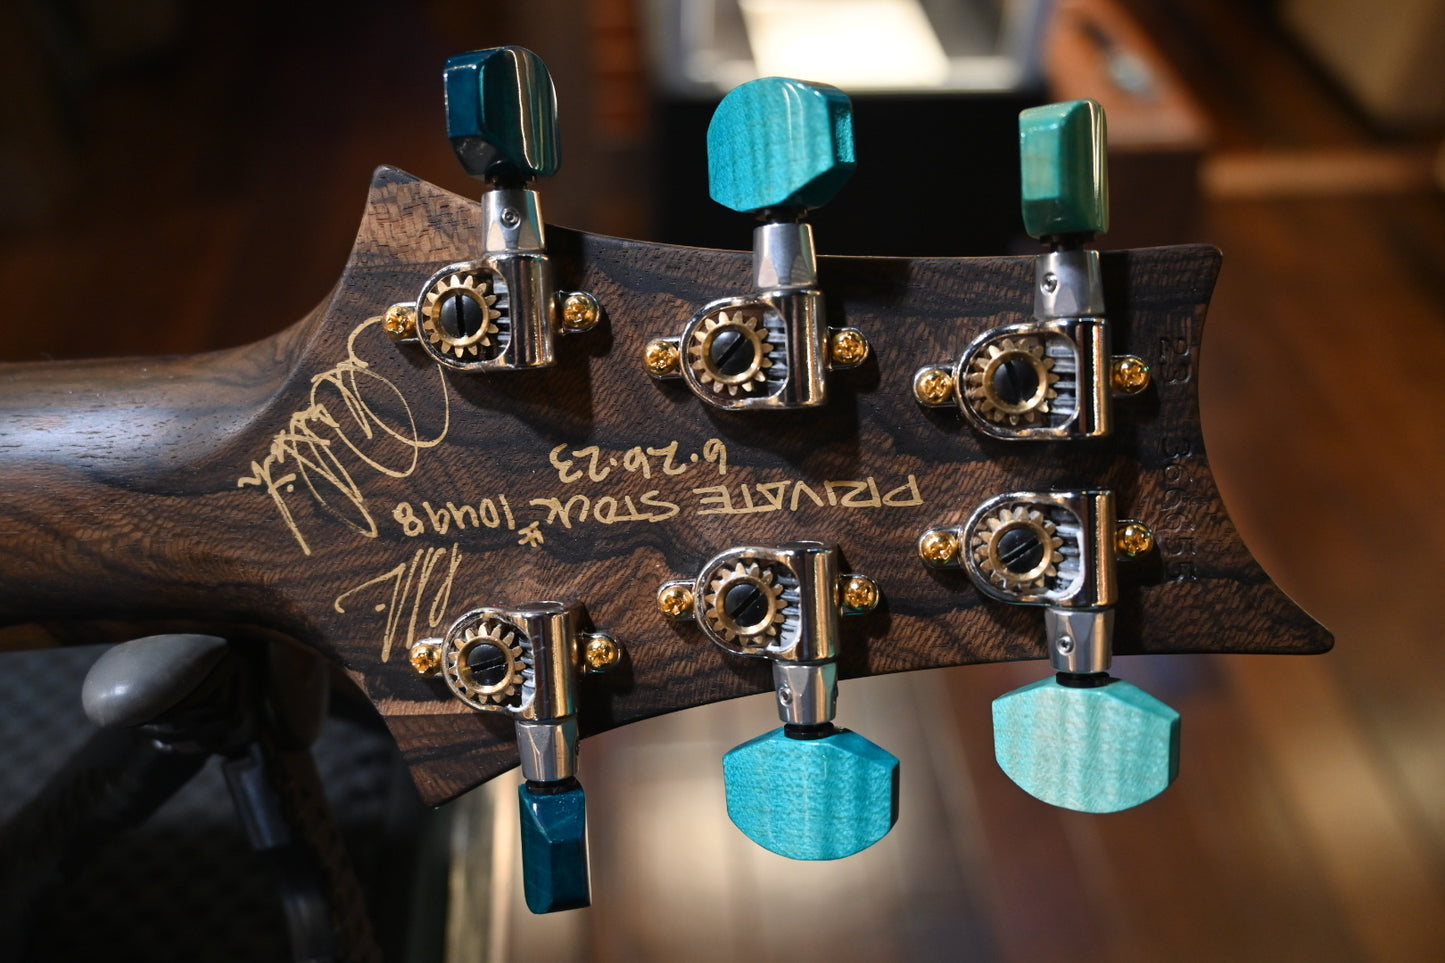 PRS Private Stock Custom 24 Koi Inlay - Bahamian Blue Glow Guitar #10498 - Danville Music